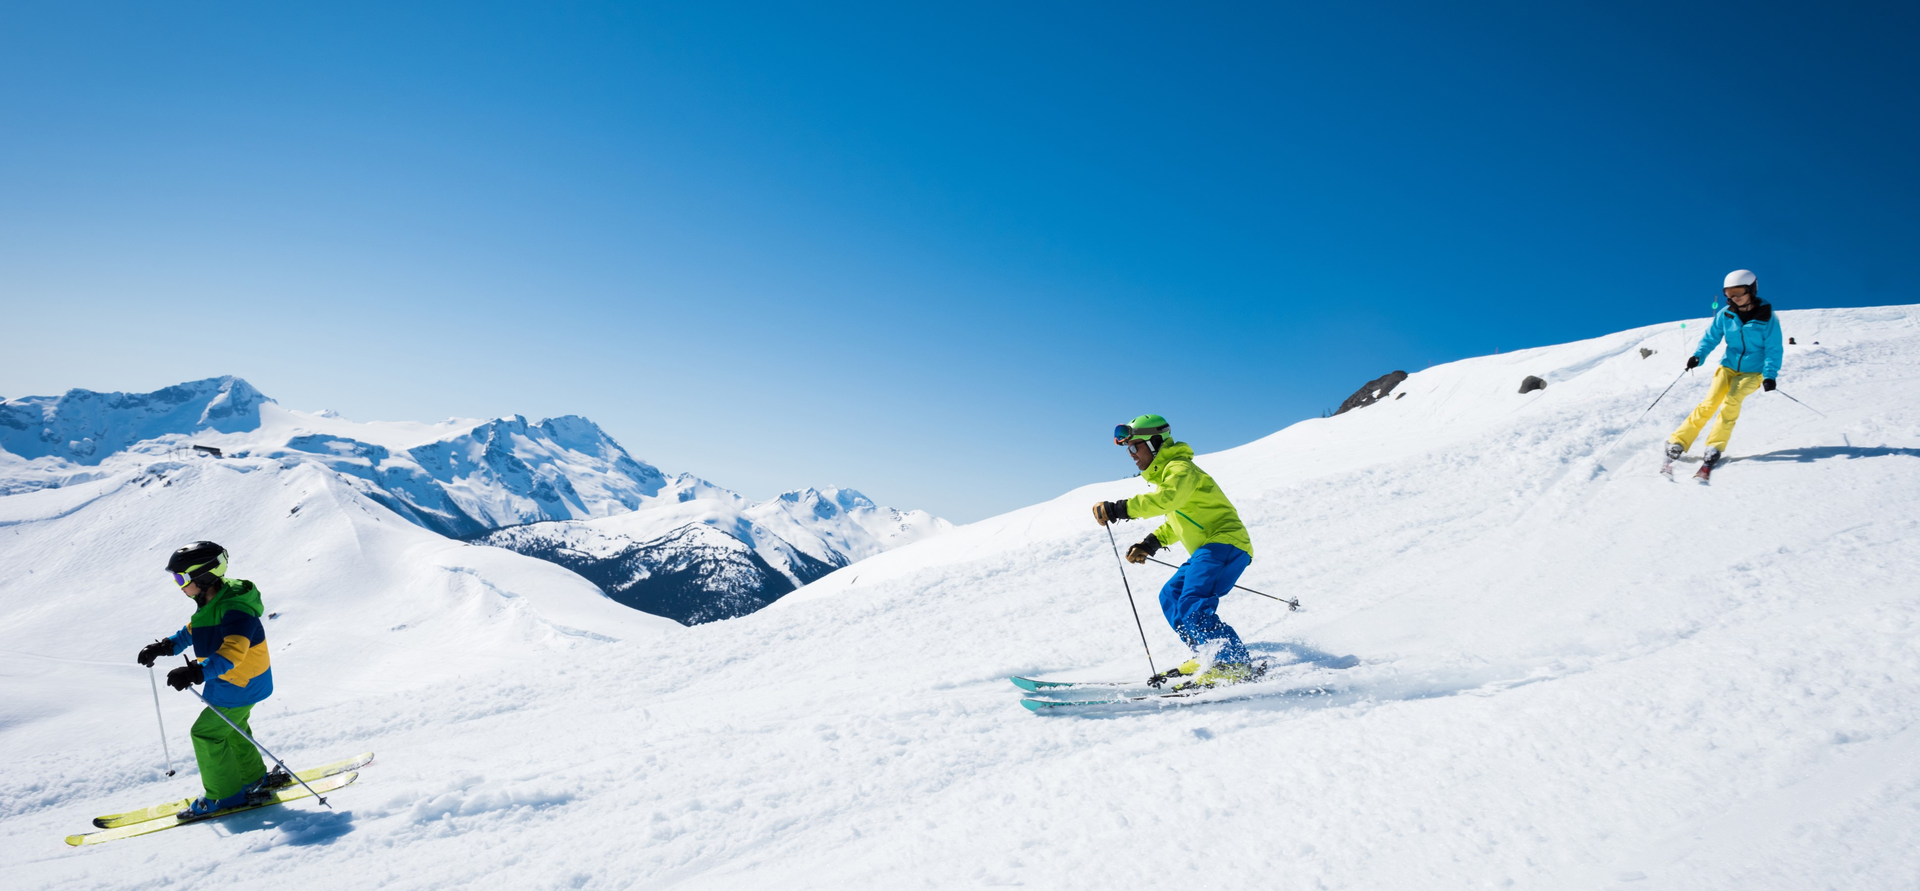 UTAH SKI GEAR - Everything You Need To Ski Affordably#N#– Utah Ski Gear